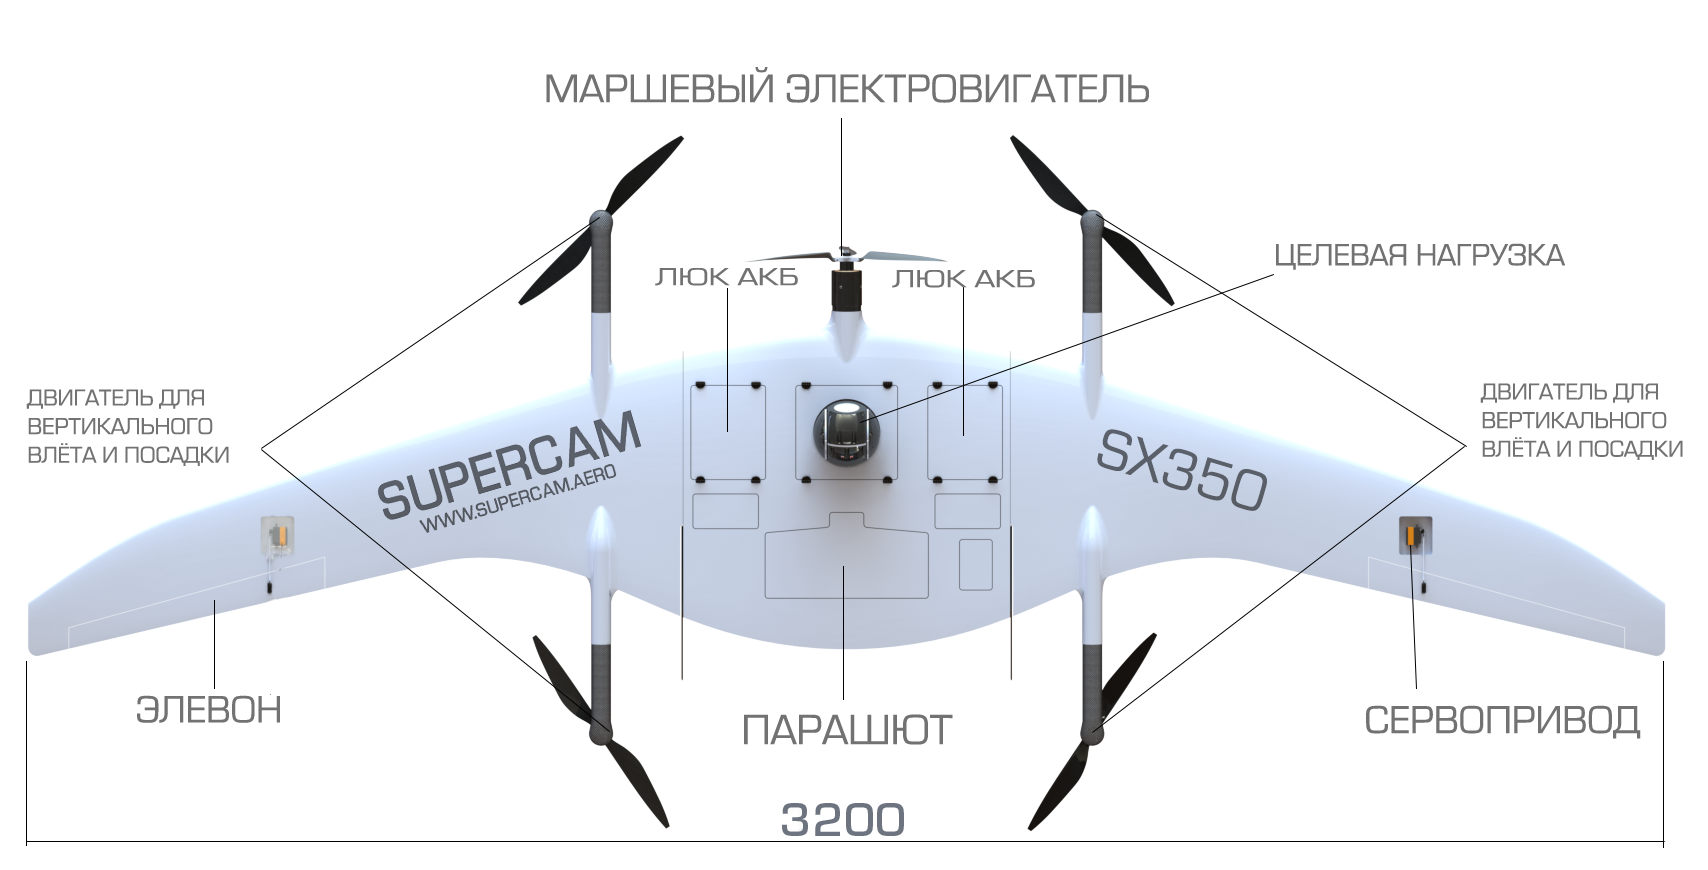 Supercam SX350 VTOL